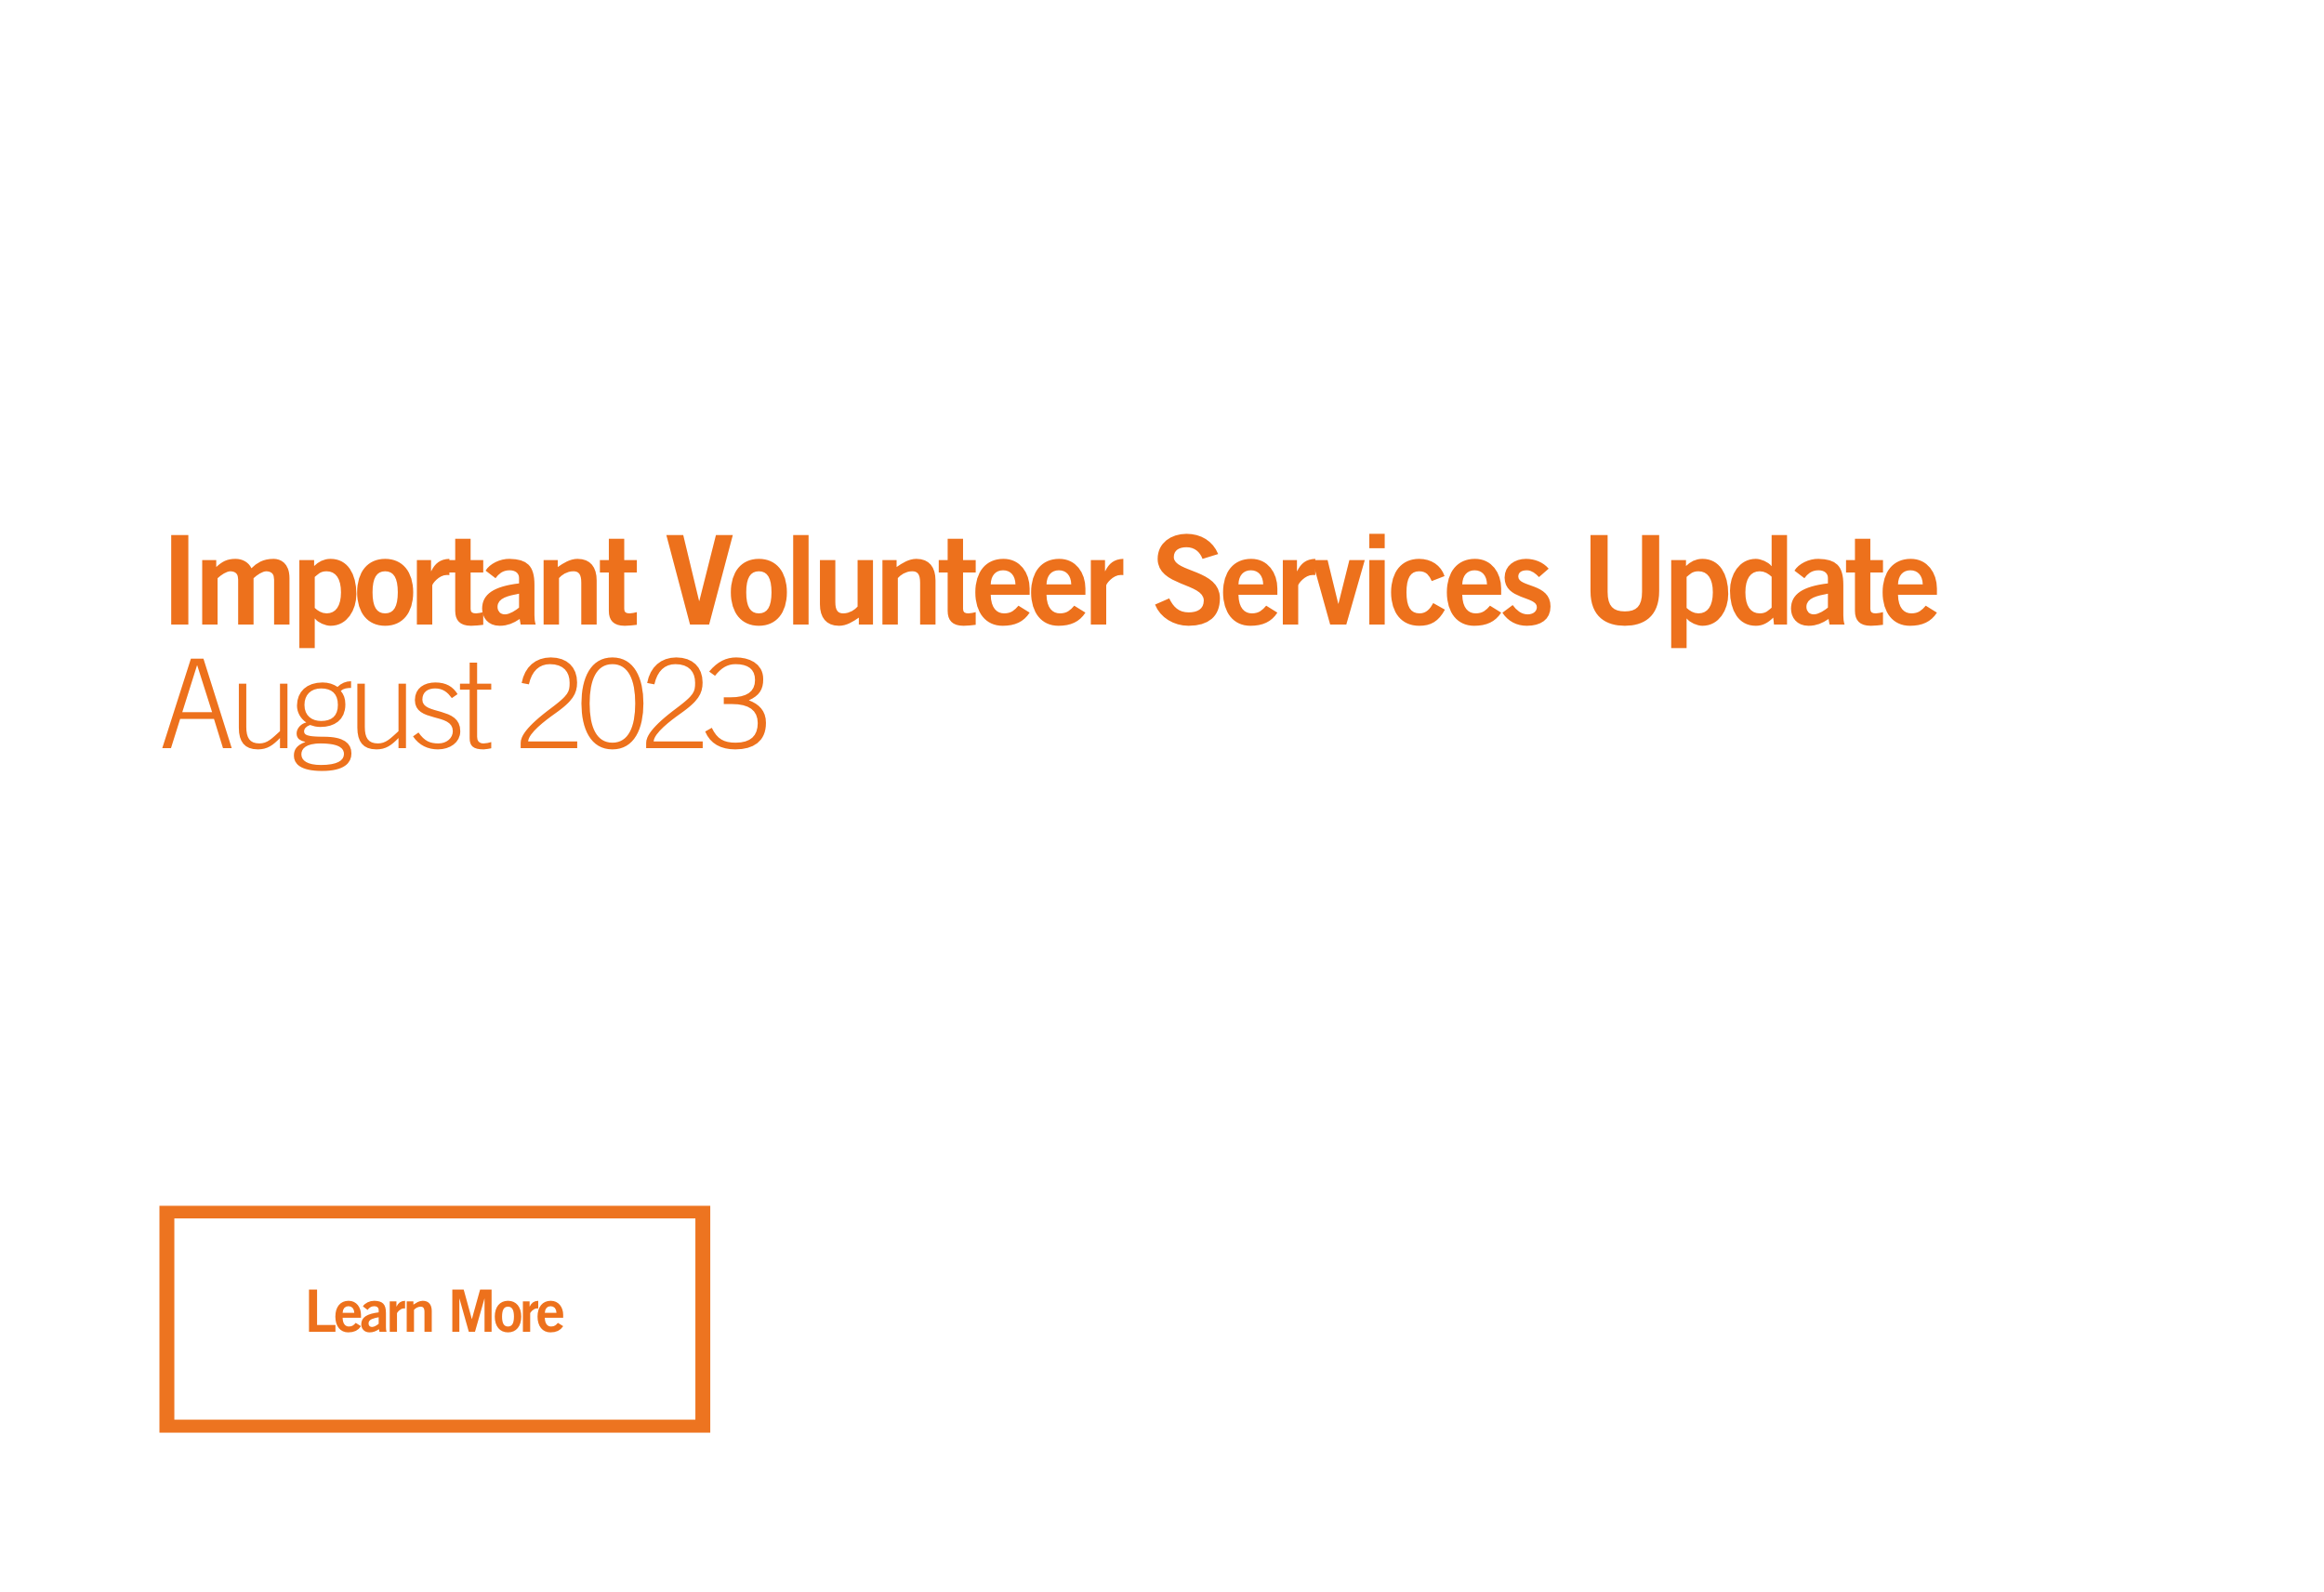 Important Volunteer Services Update Banner